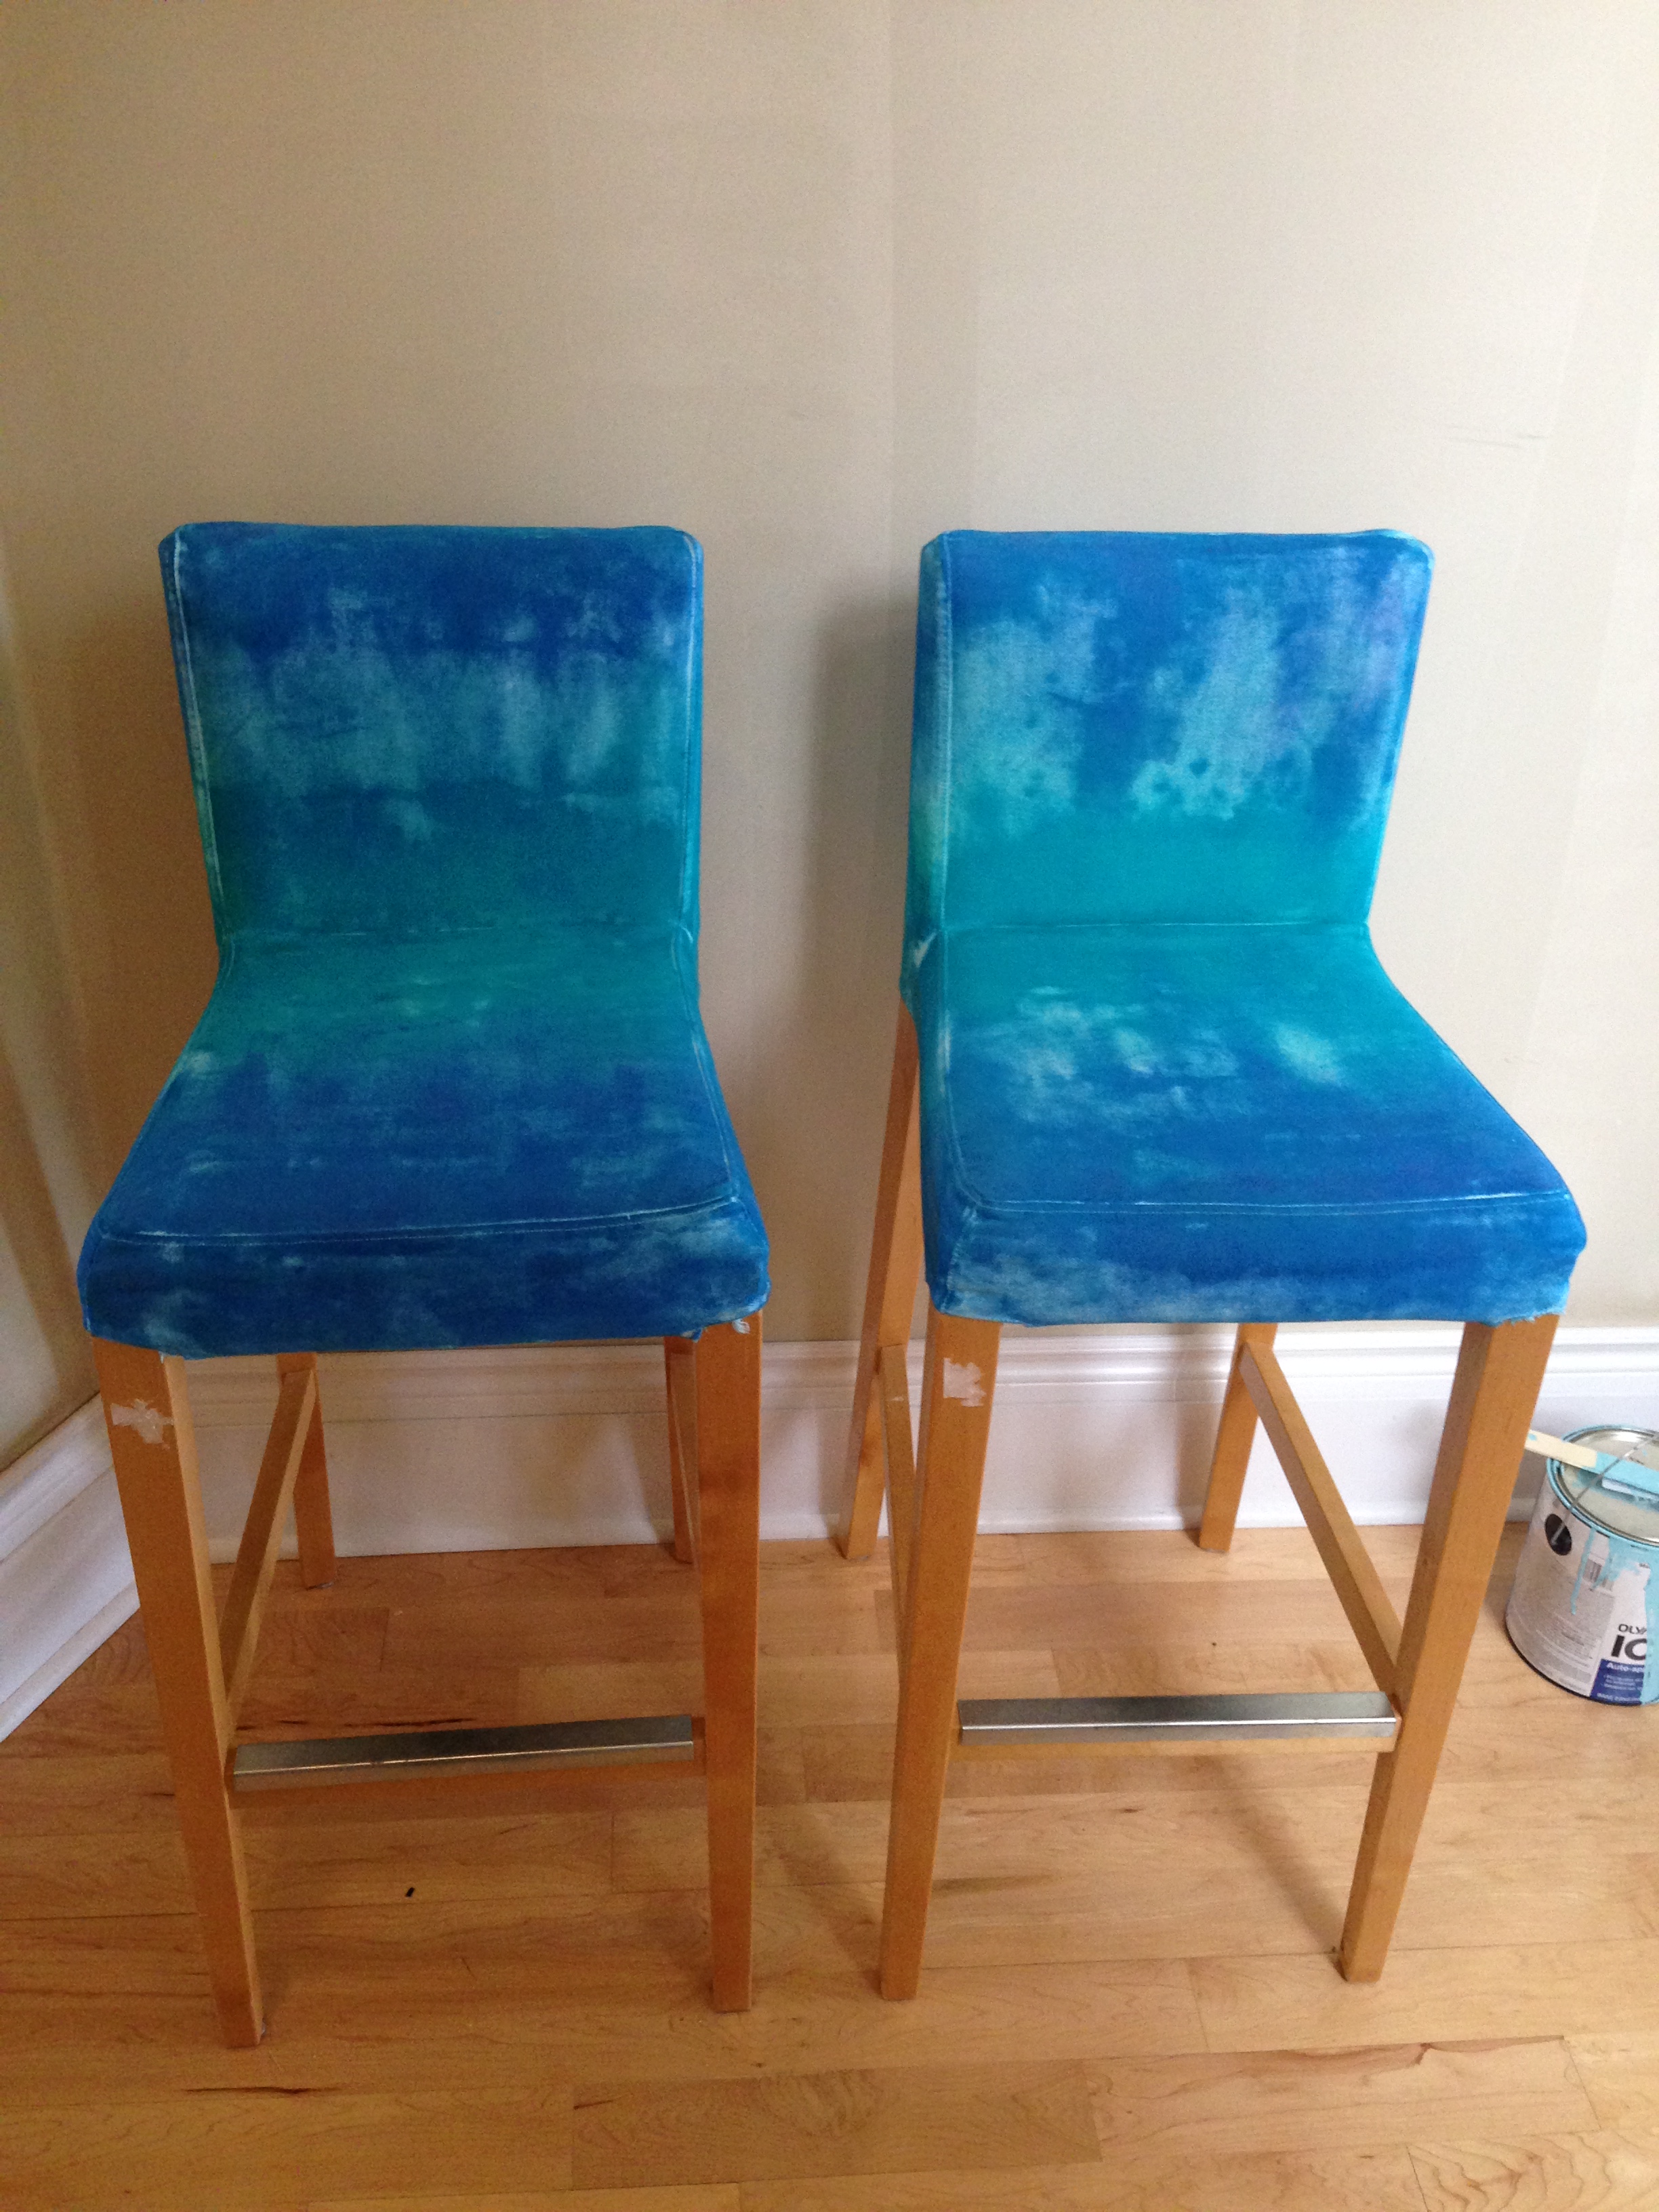 Half done tie-dye chairs